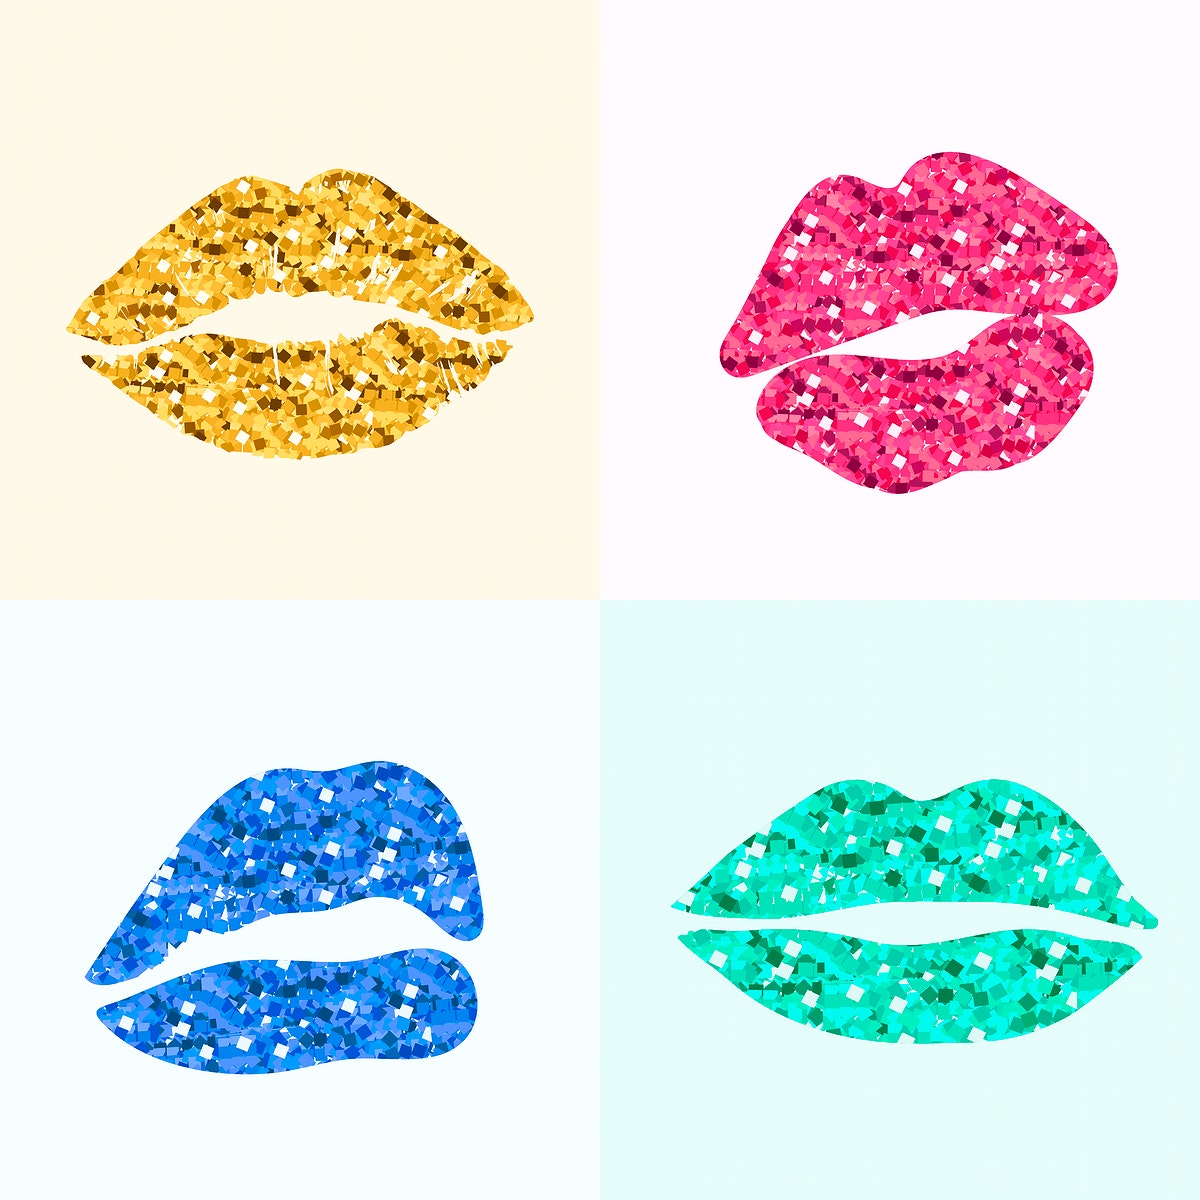 480 Lipstick Kiss Mark Stock Photos Pictures  RoyaltyFree Images   iStock  Lipstick kisses Lipstick man